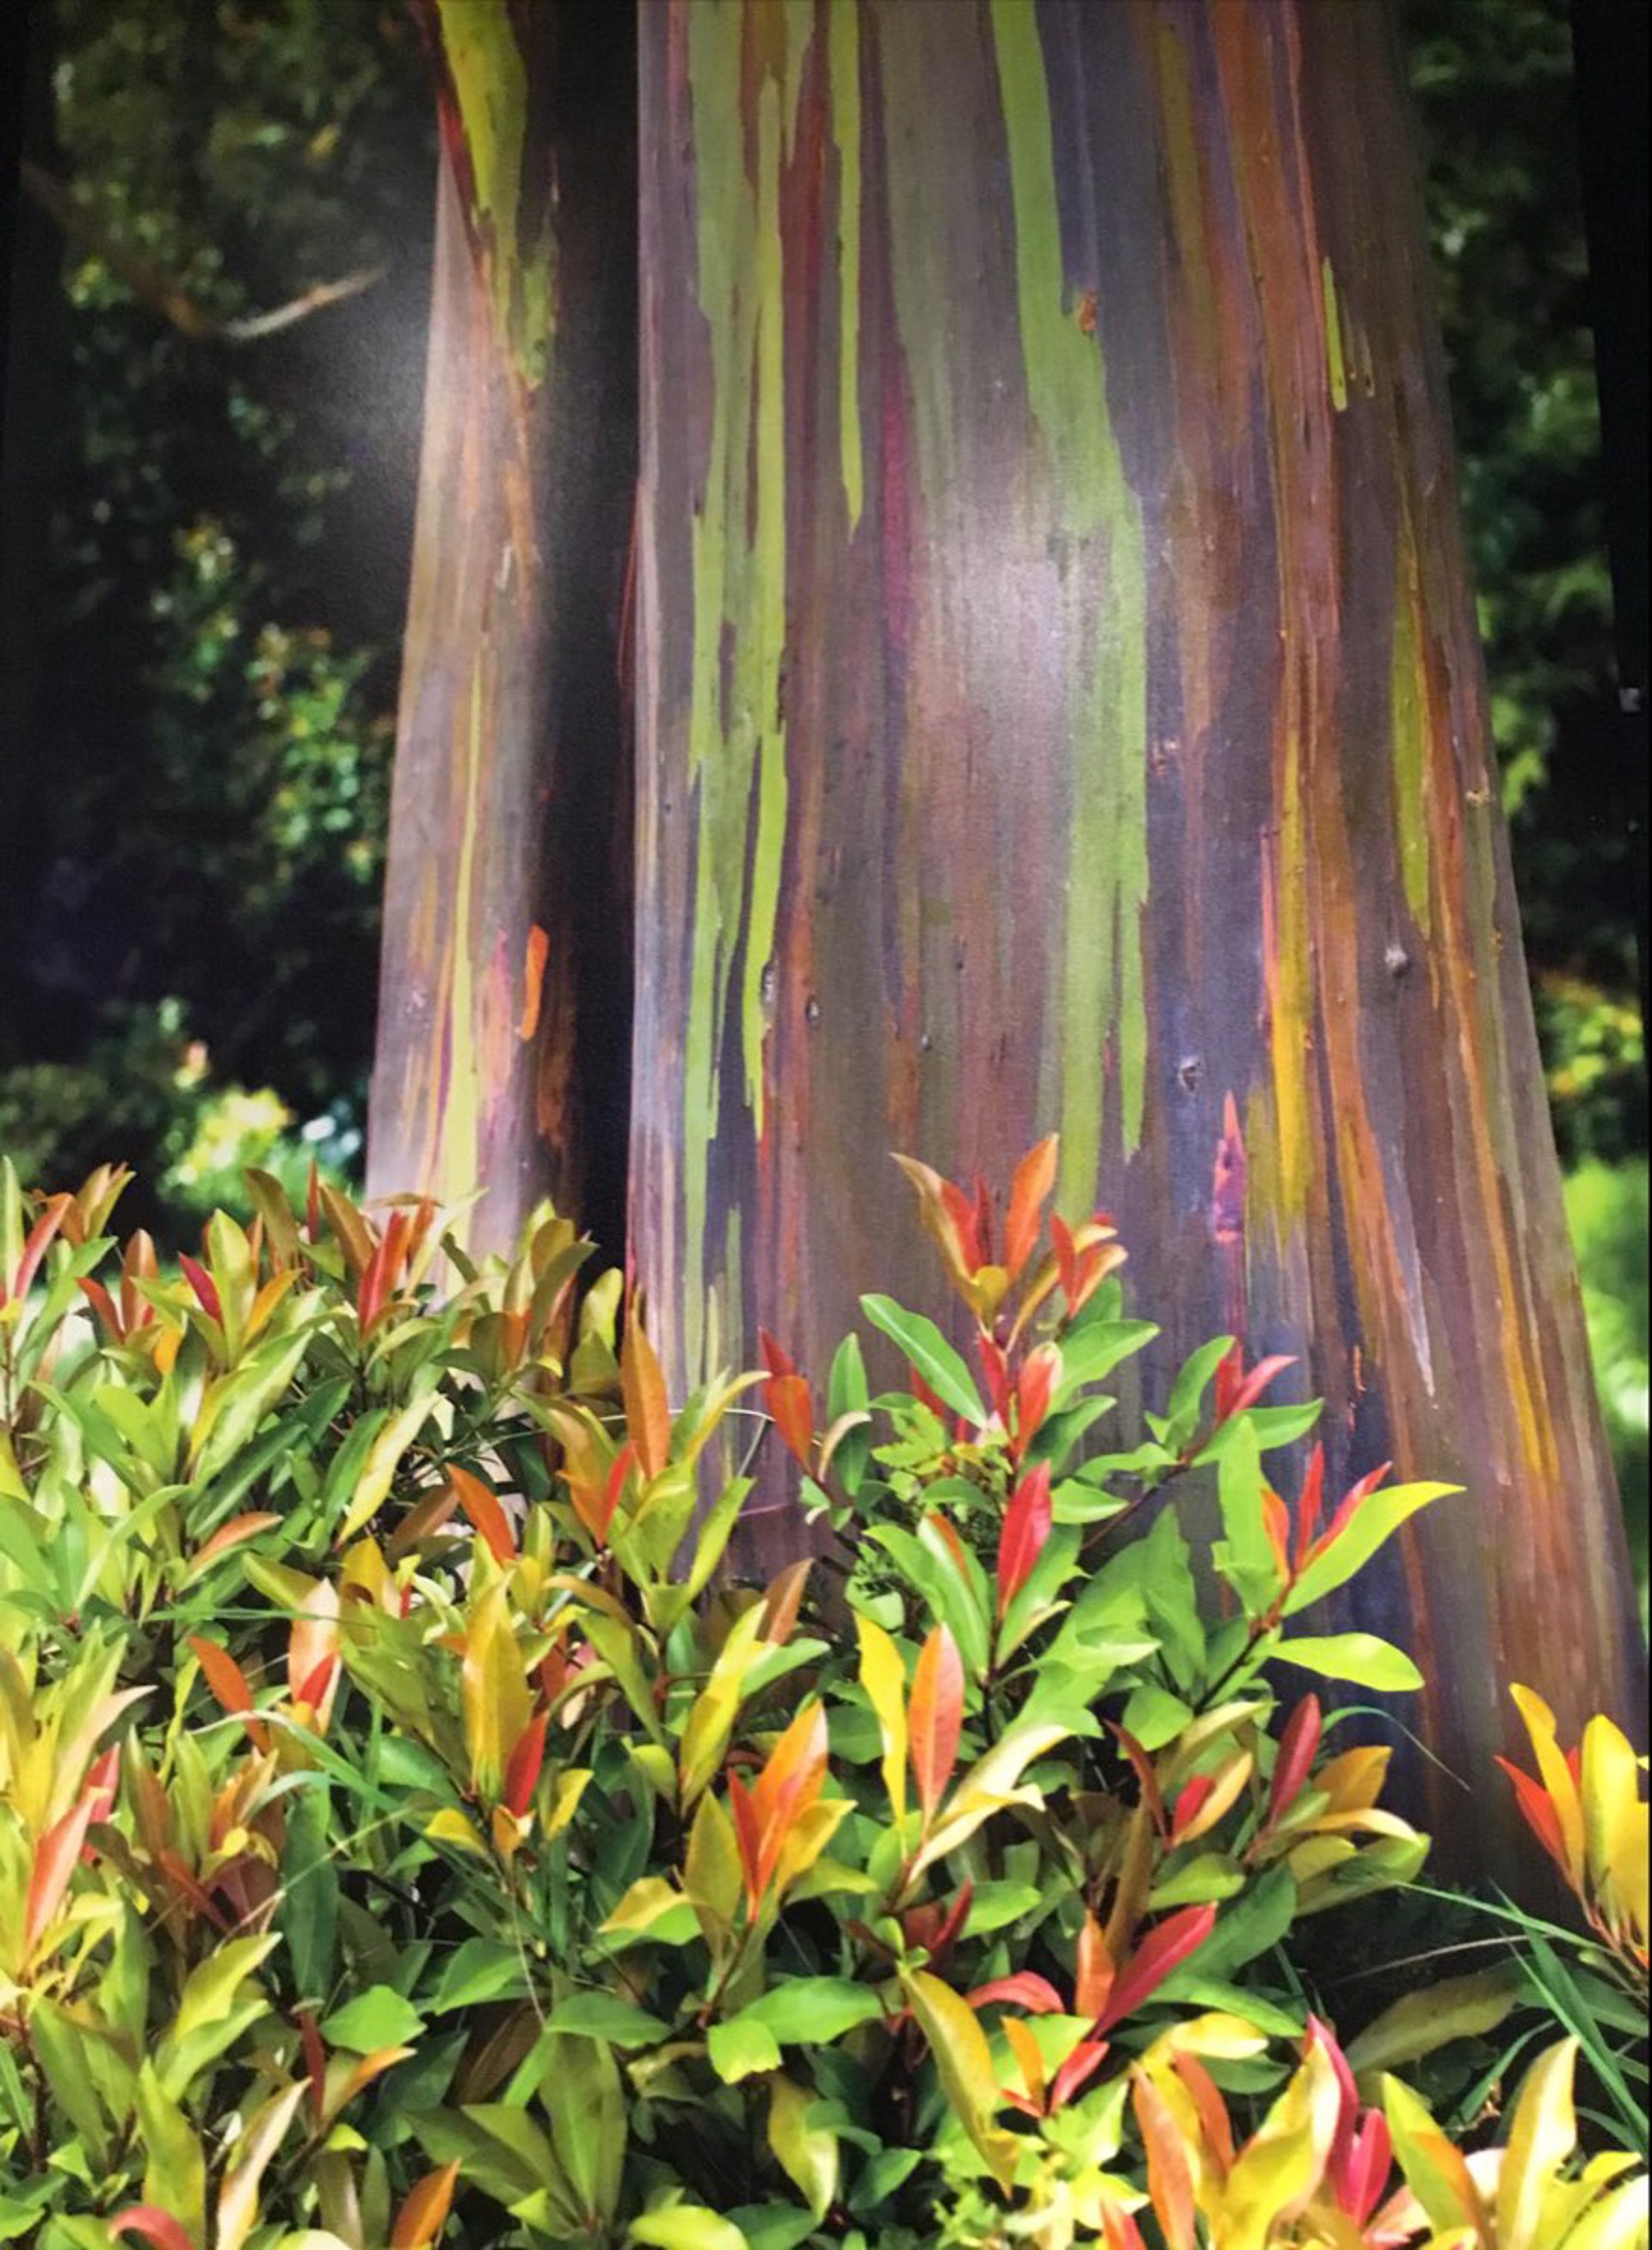 Painted Eucalyptus by Bryan Pezman